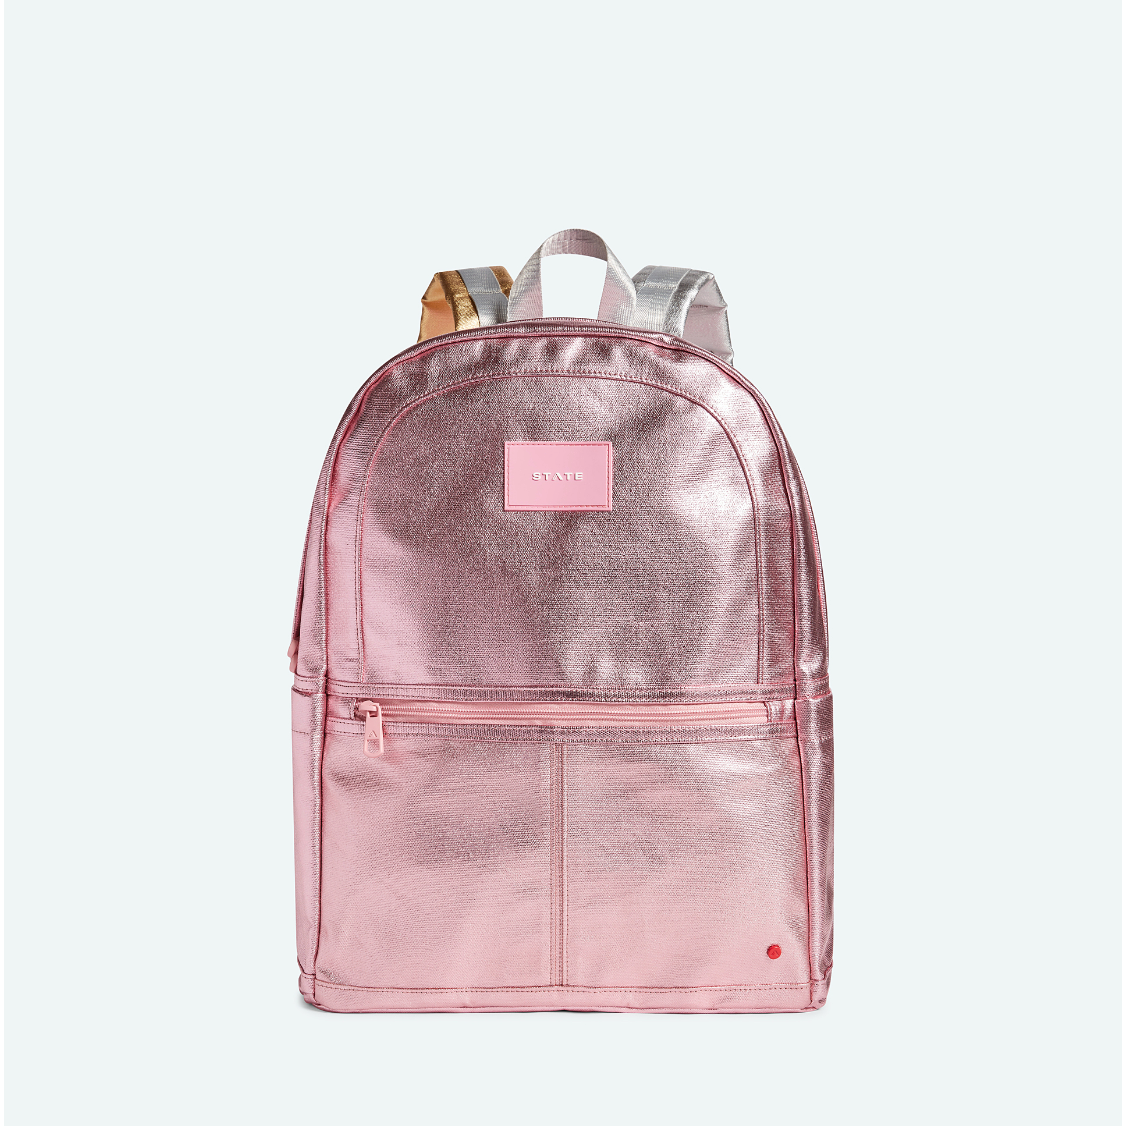 kane kids large backpack | pink/silver